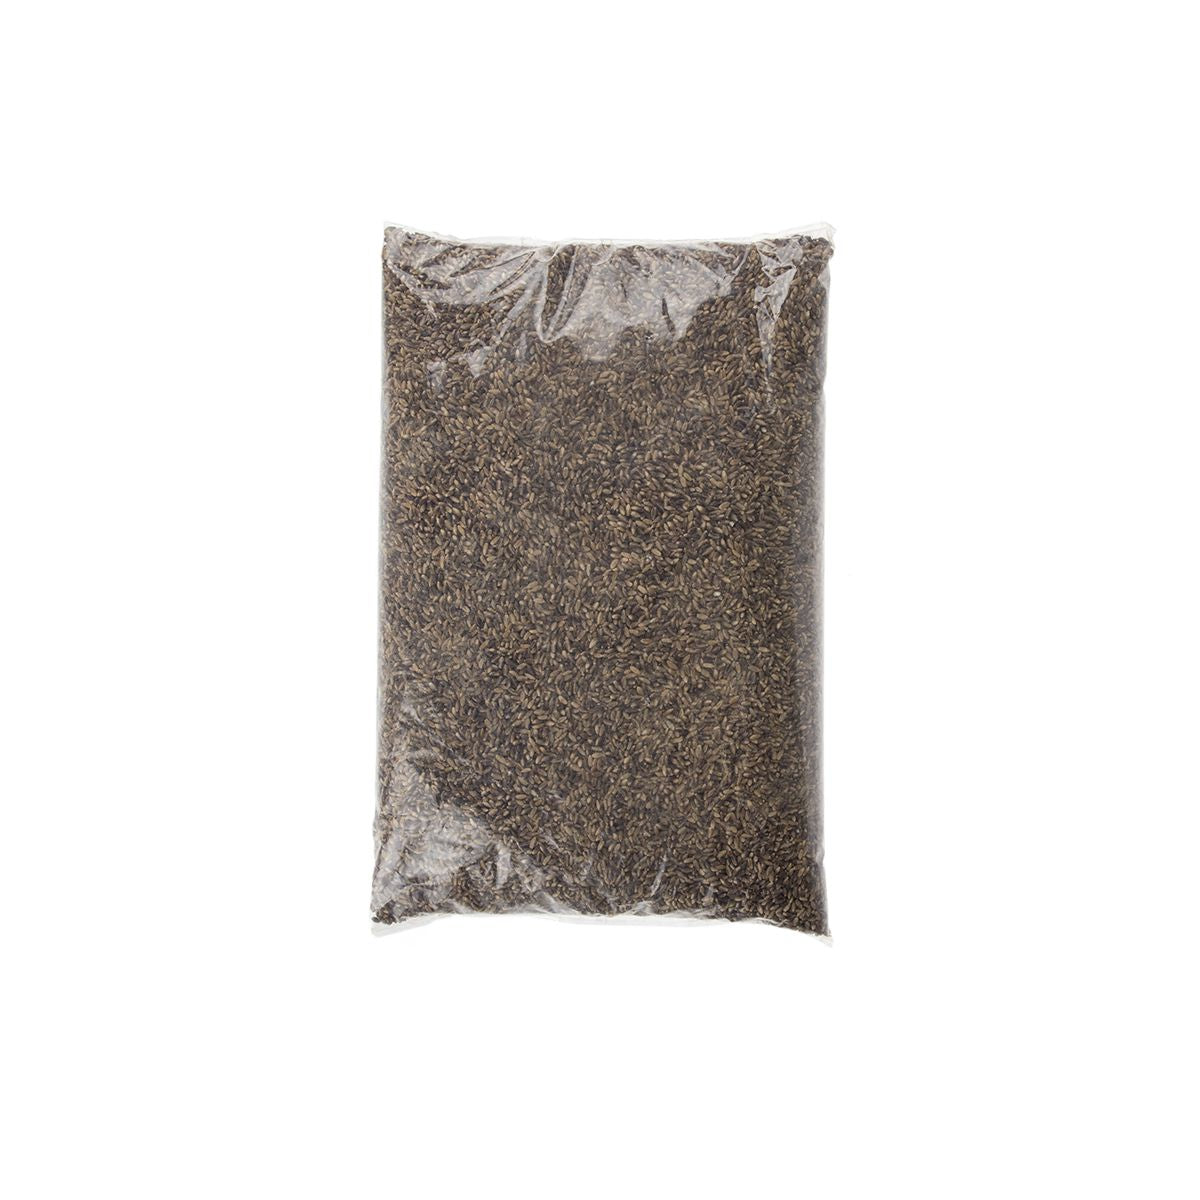 BoxNCase Black Barley Bag